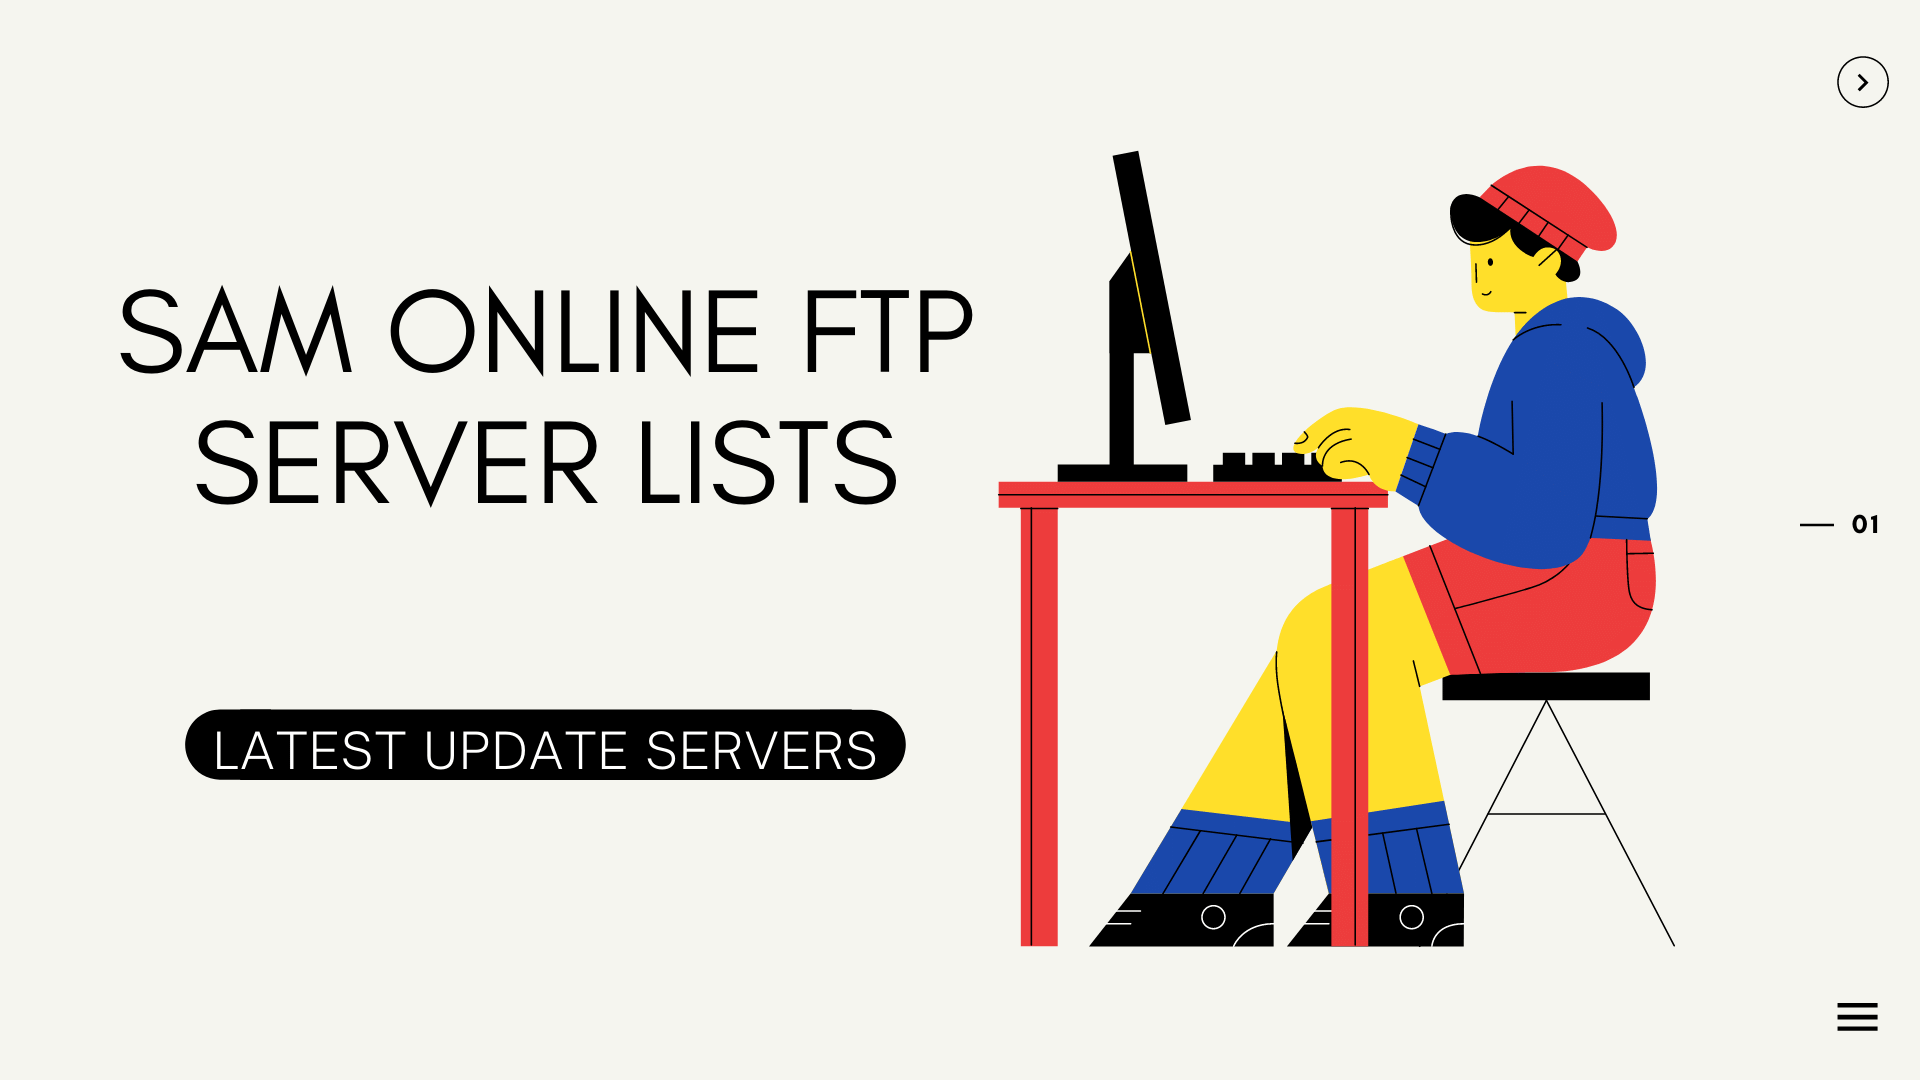 SAM ONLINE FTP SERVER LISTS & LATEST UPDATE SERVERS